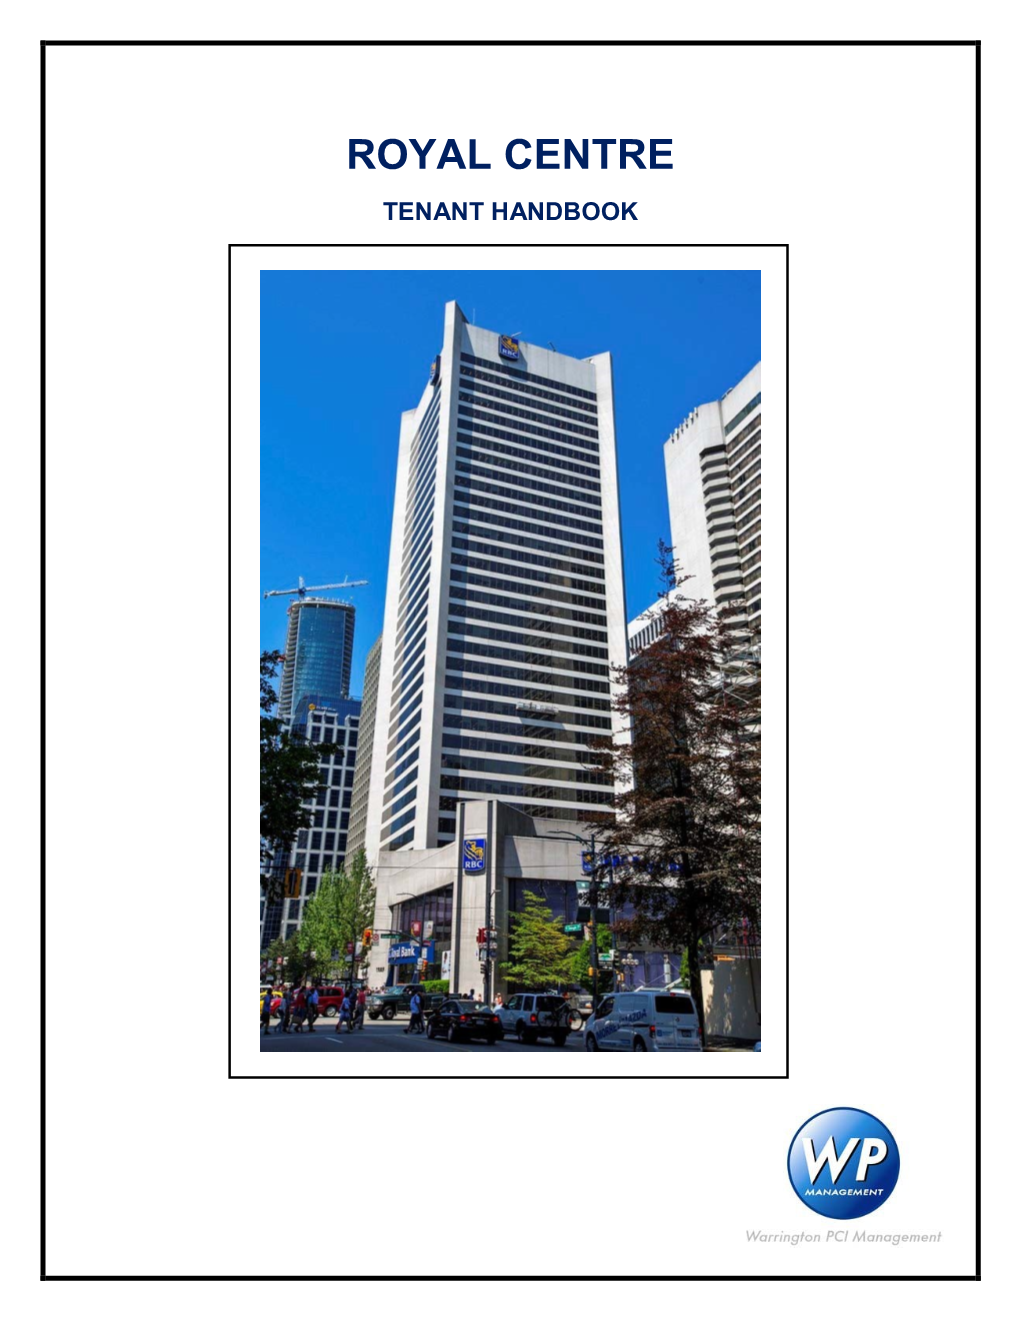 Royal Centre Tenant Handbook